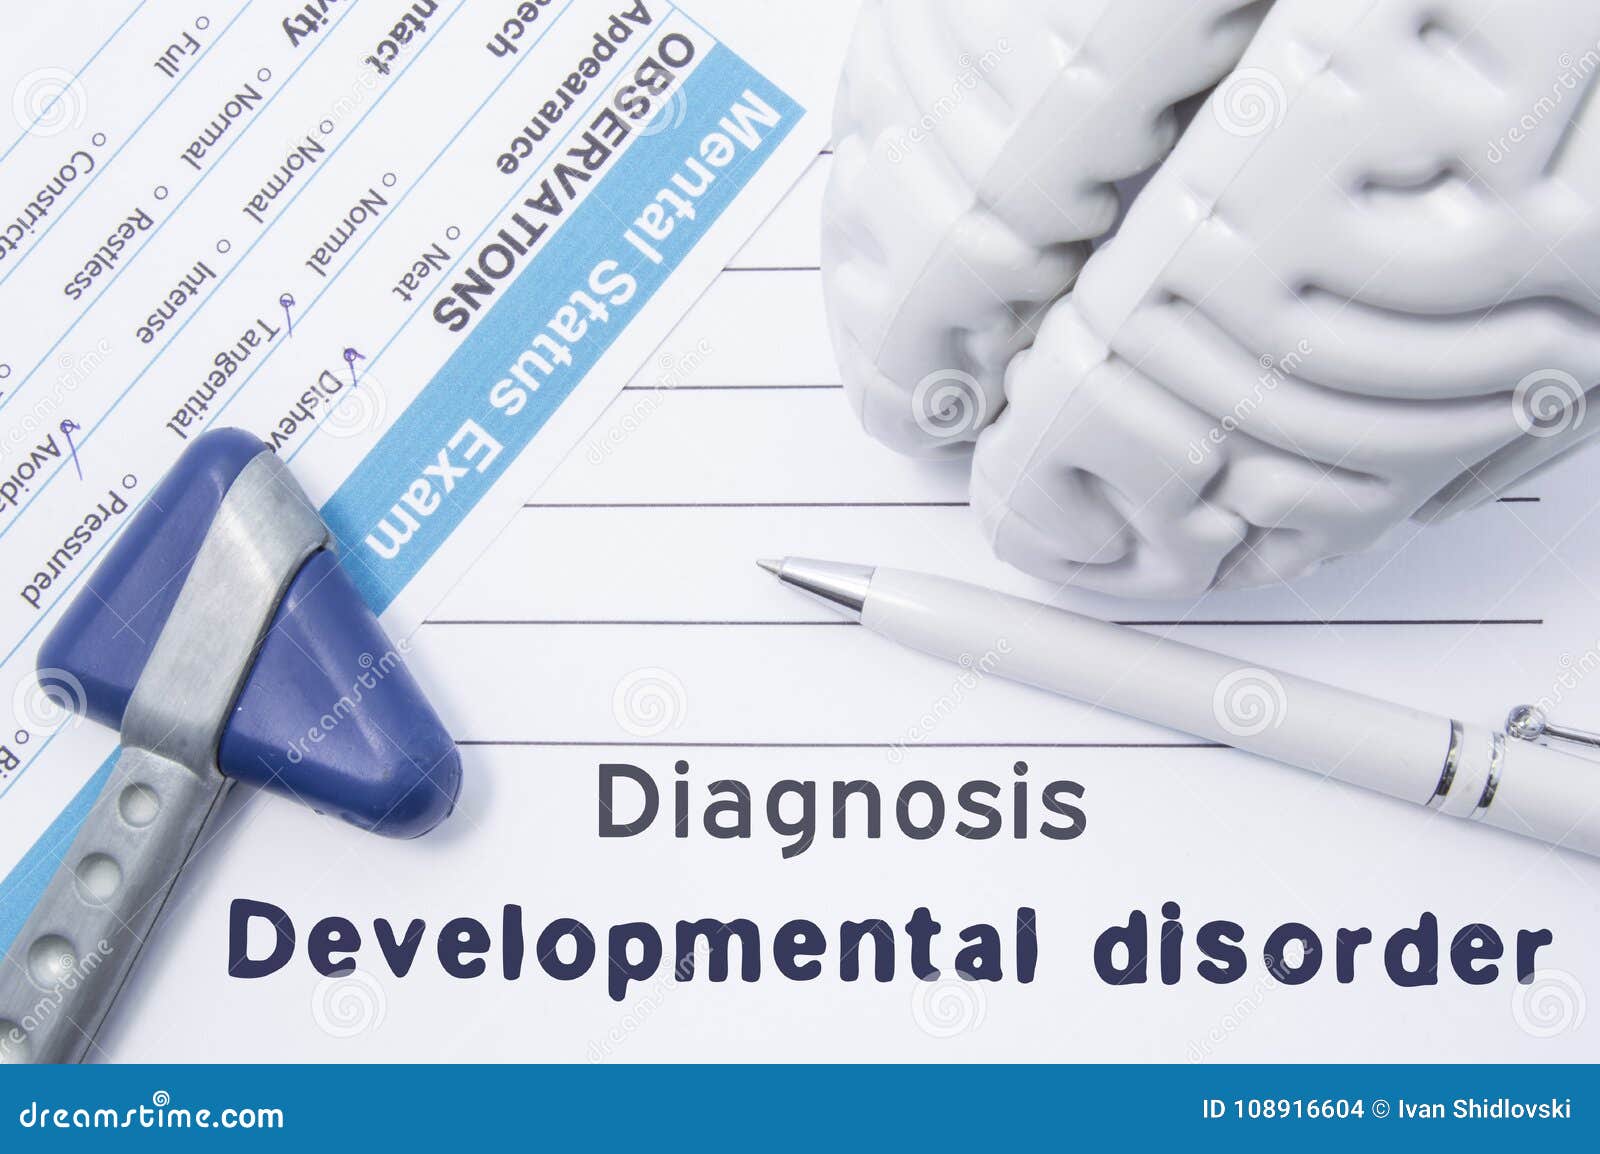 diagnosis developmental disorder. medical psychiatrist opinion with written psychiatric diagnosis of developmental disorder, quest